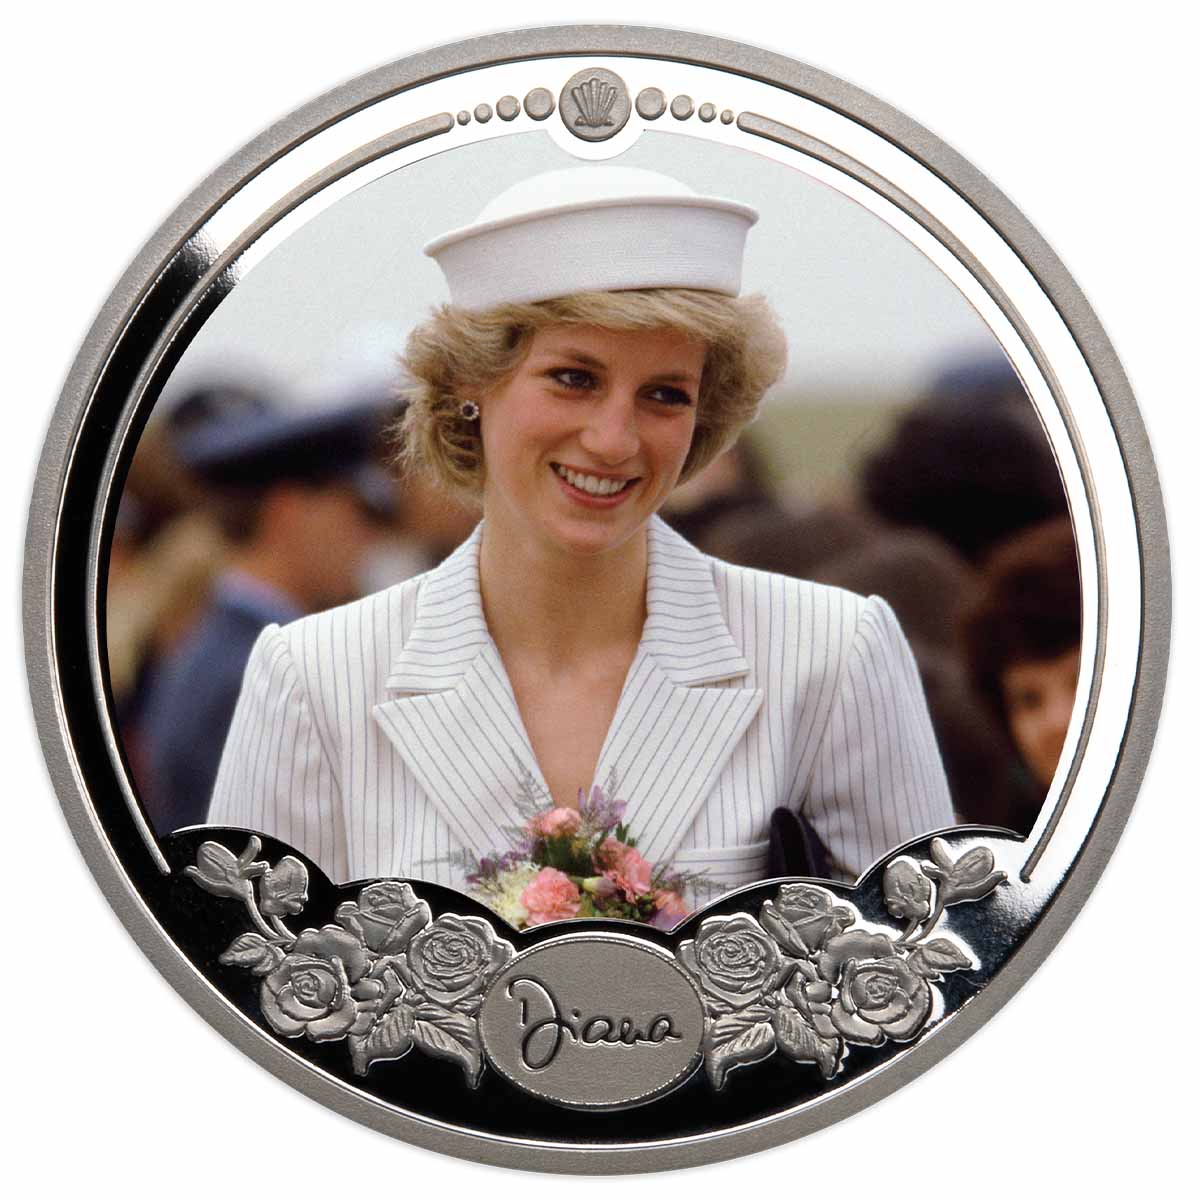 Diana, Portraits of a Princess - Individual Spirit Silver Prooflike Commemorative